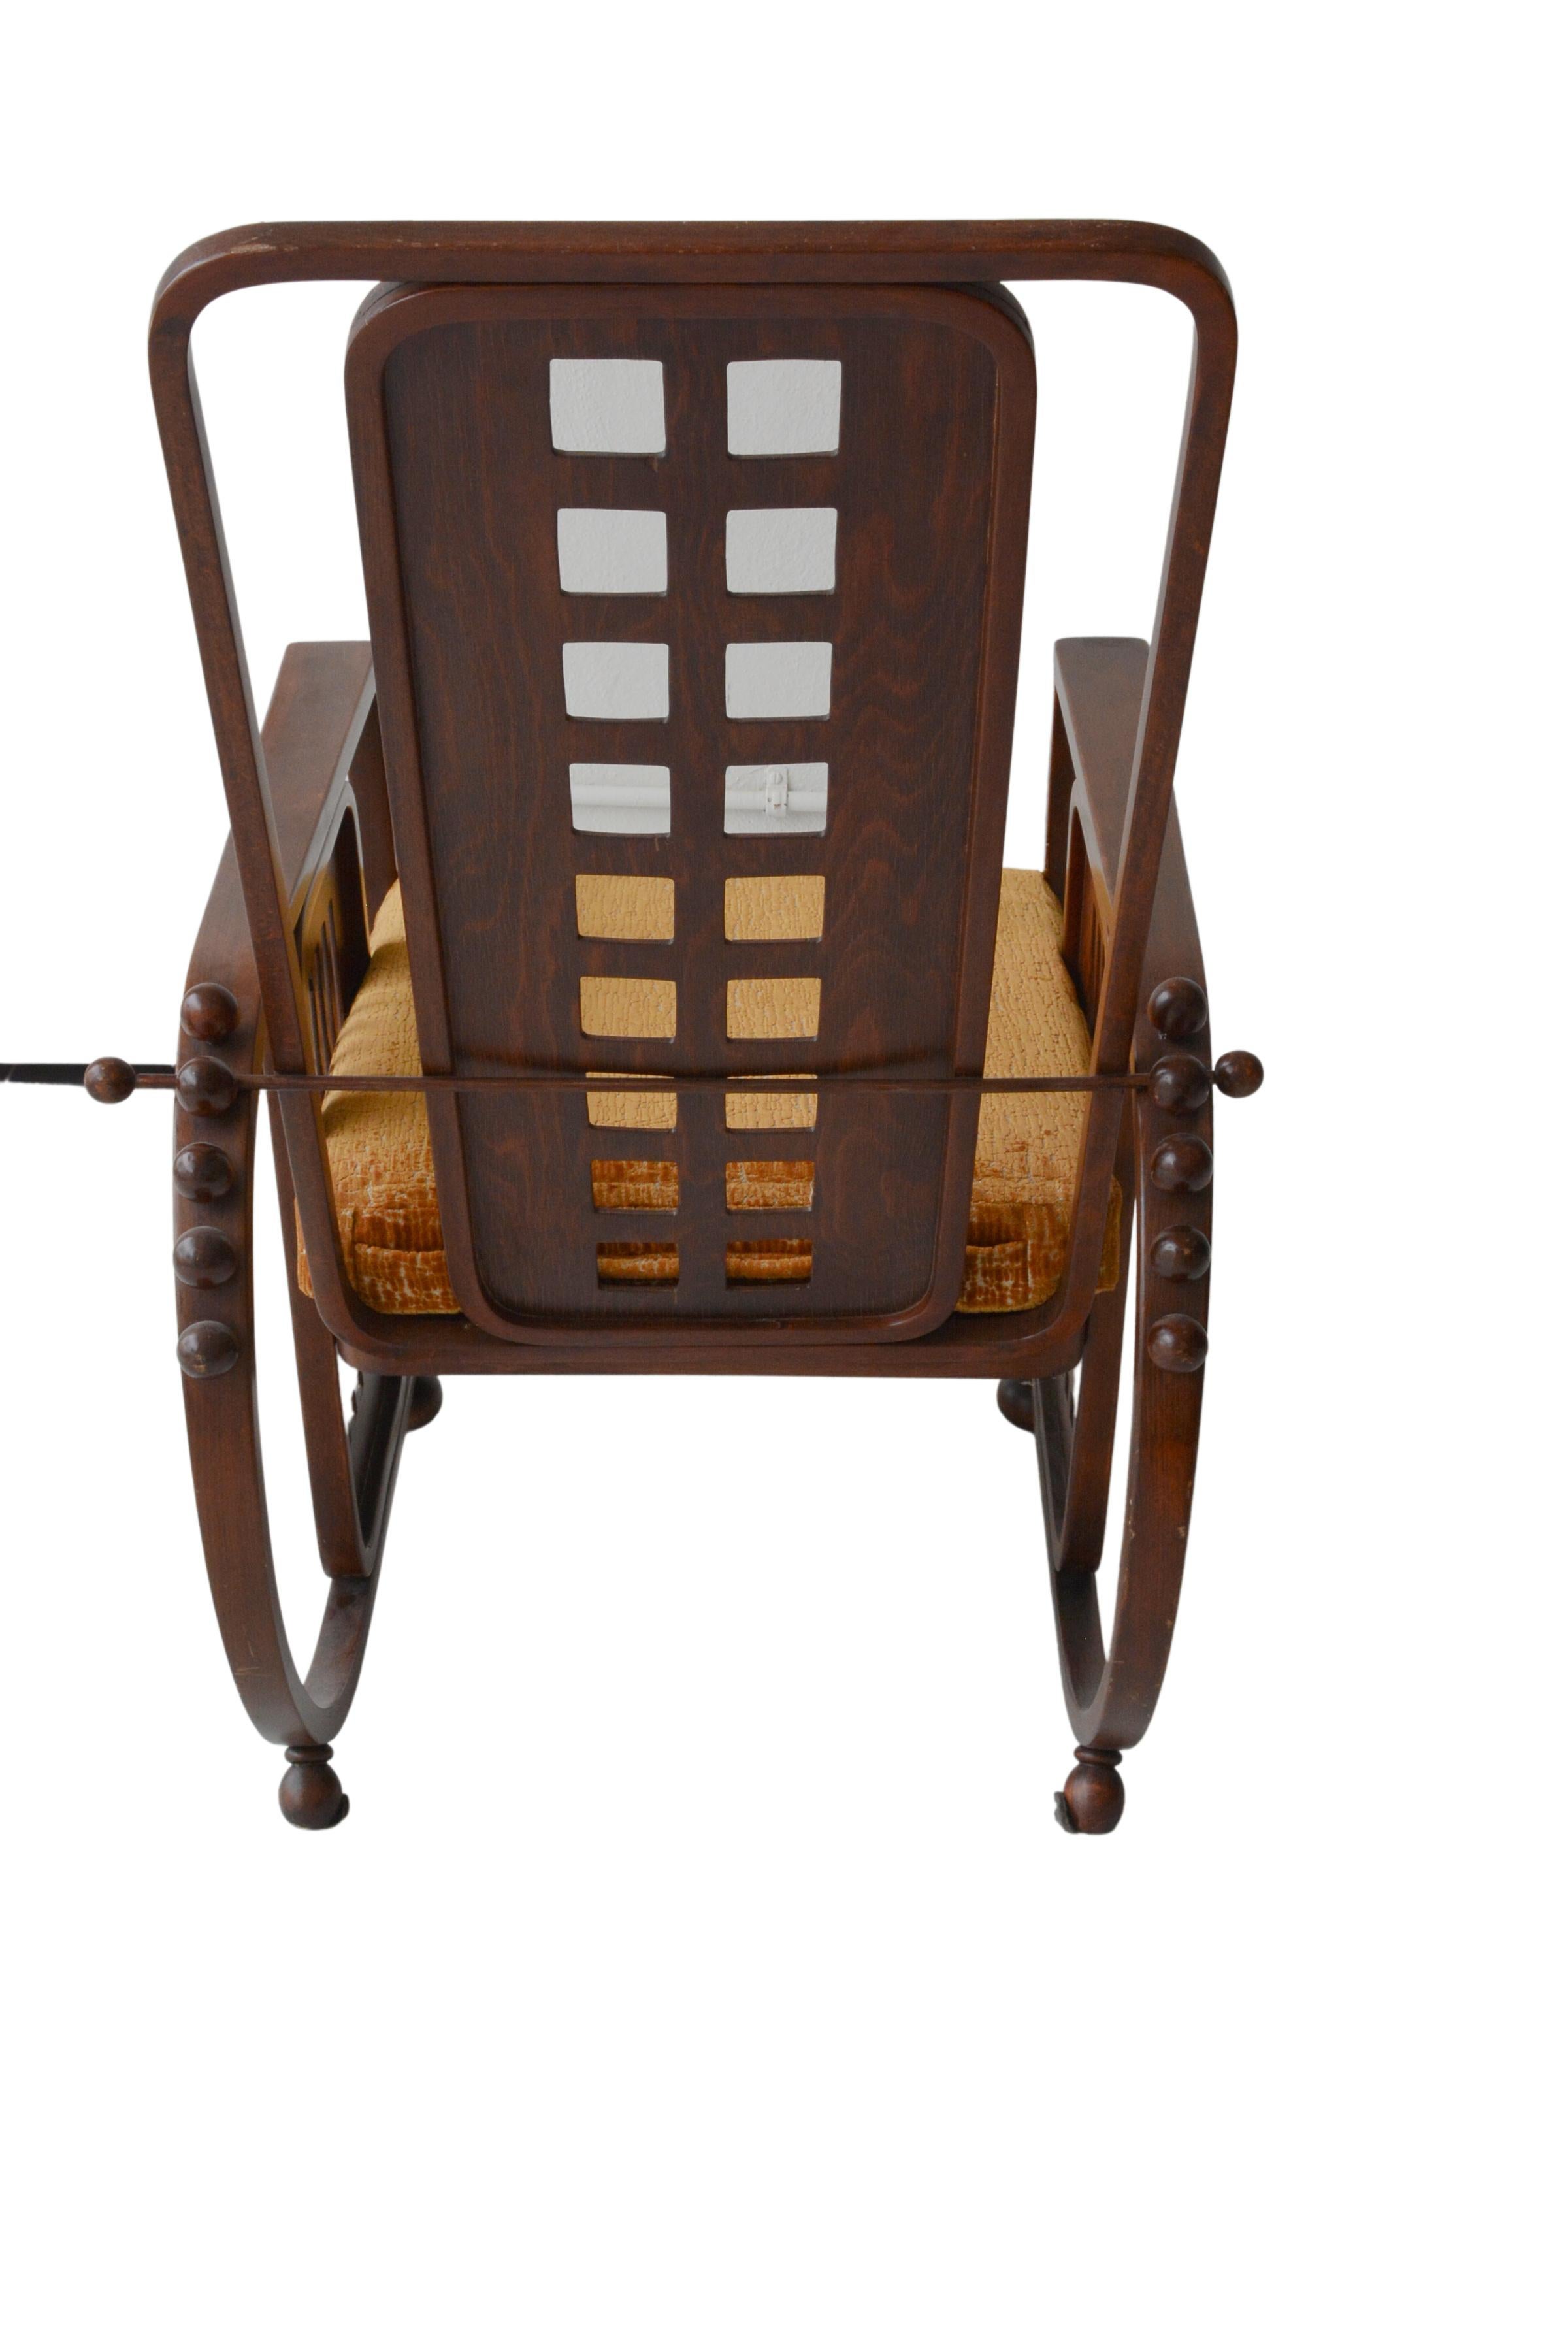 Austrian Sitzmaschine Chair by Josef Hoffman, Model No. 670 For Sale